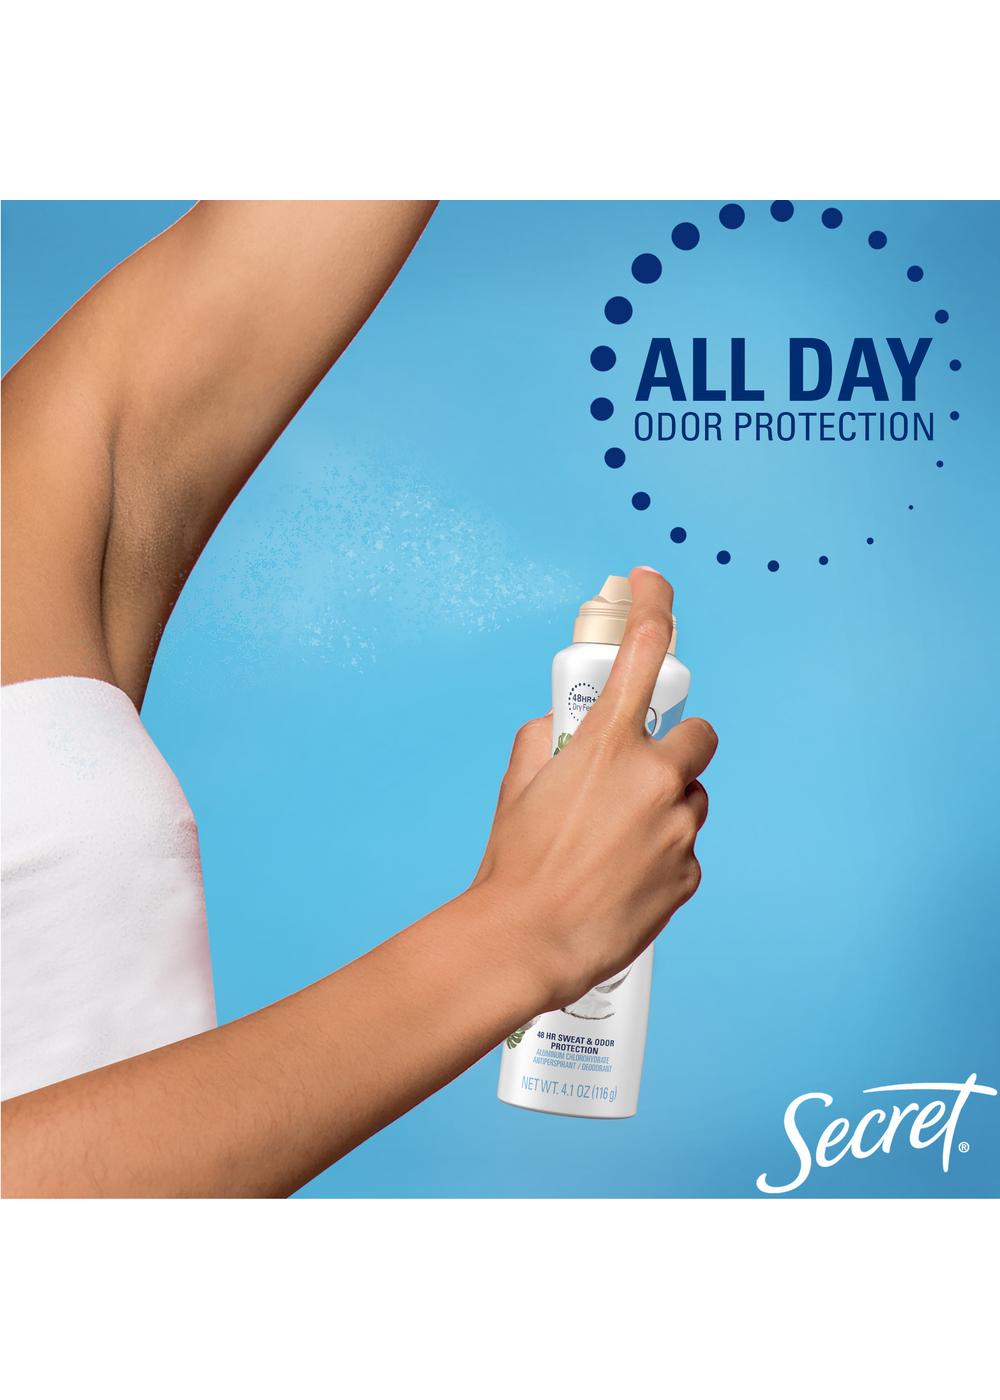 Secret Antiperspirant Deodorant Dry Spray - Relaxing Lavender; image 7 of 8